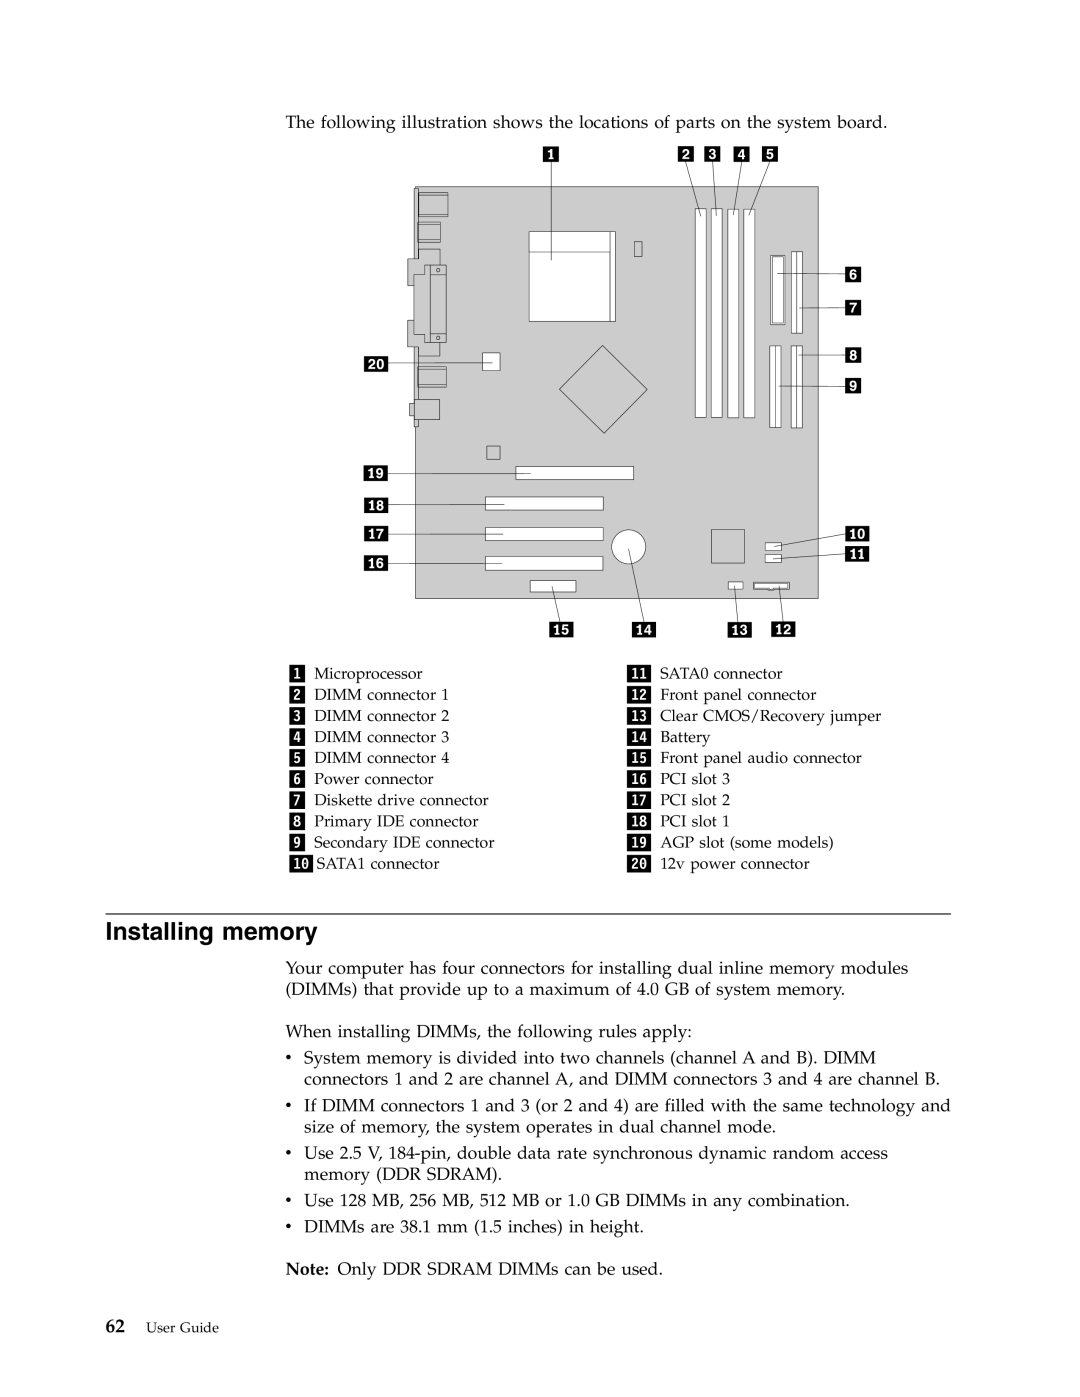 Lenovo M50e Series, A50 manual Installing memory, 62User Guide 